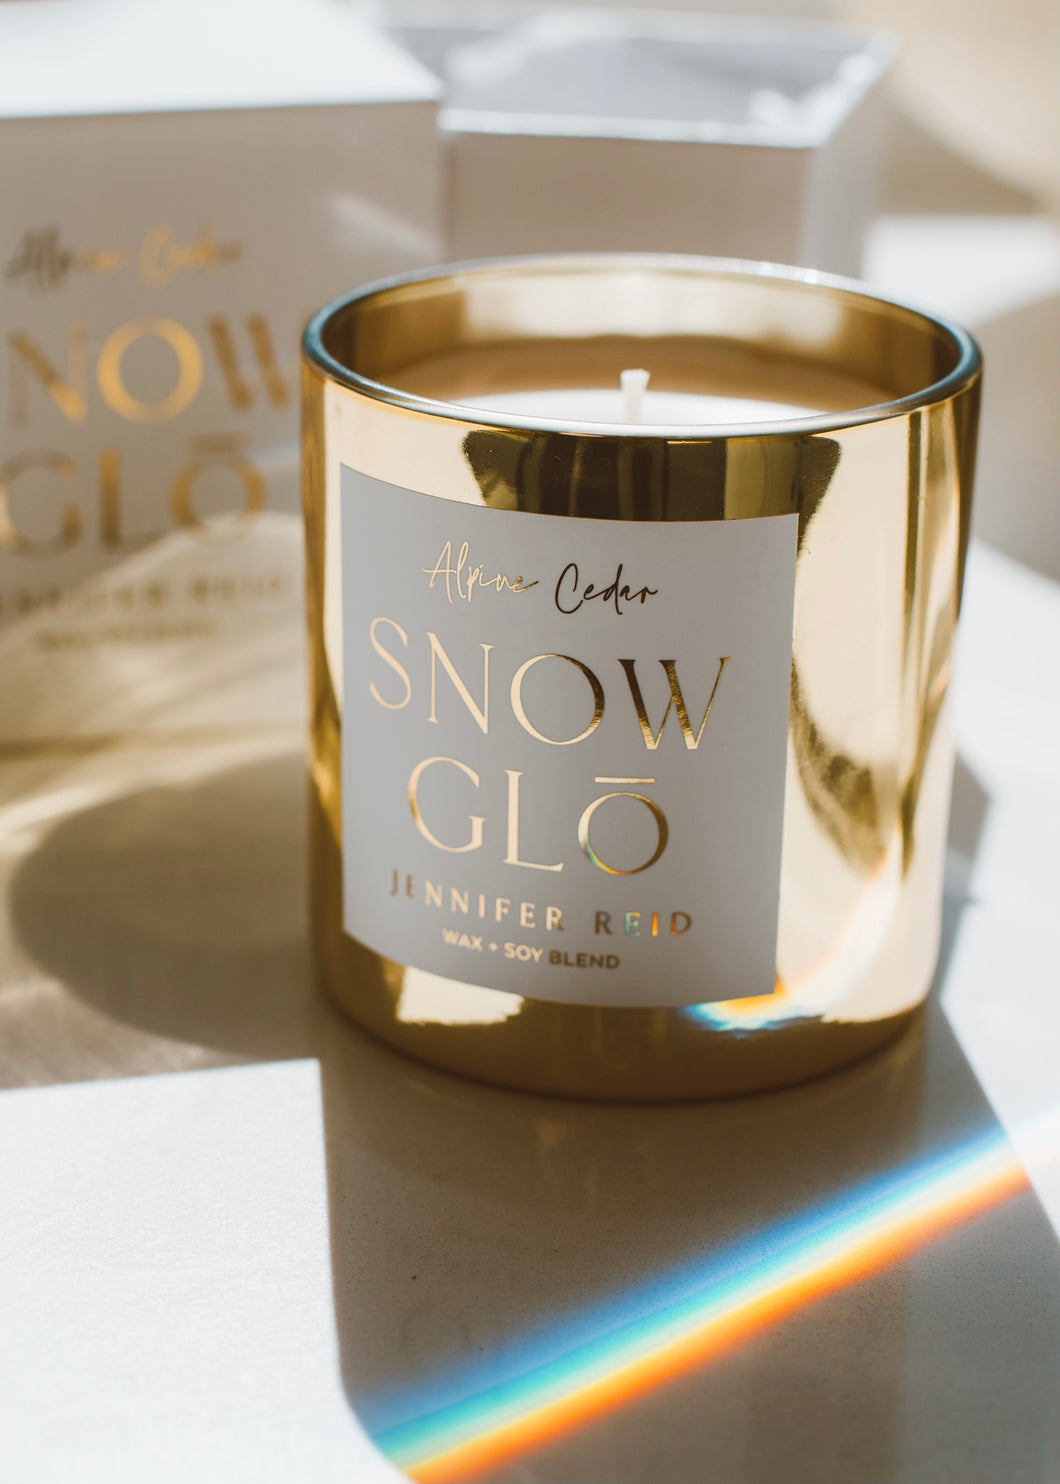 Snow GLO Candle by Jennifer Reid